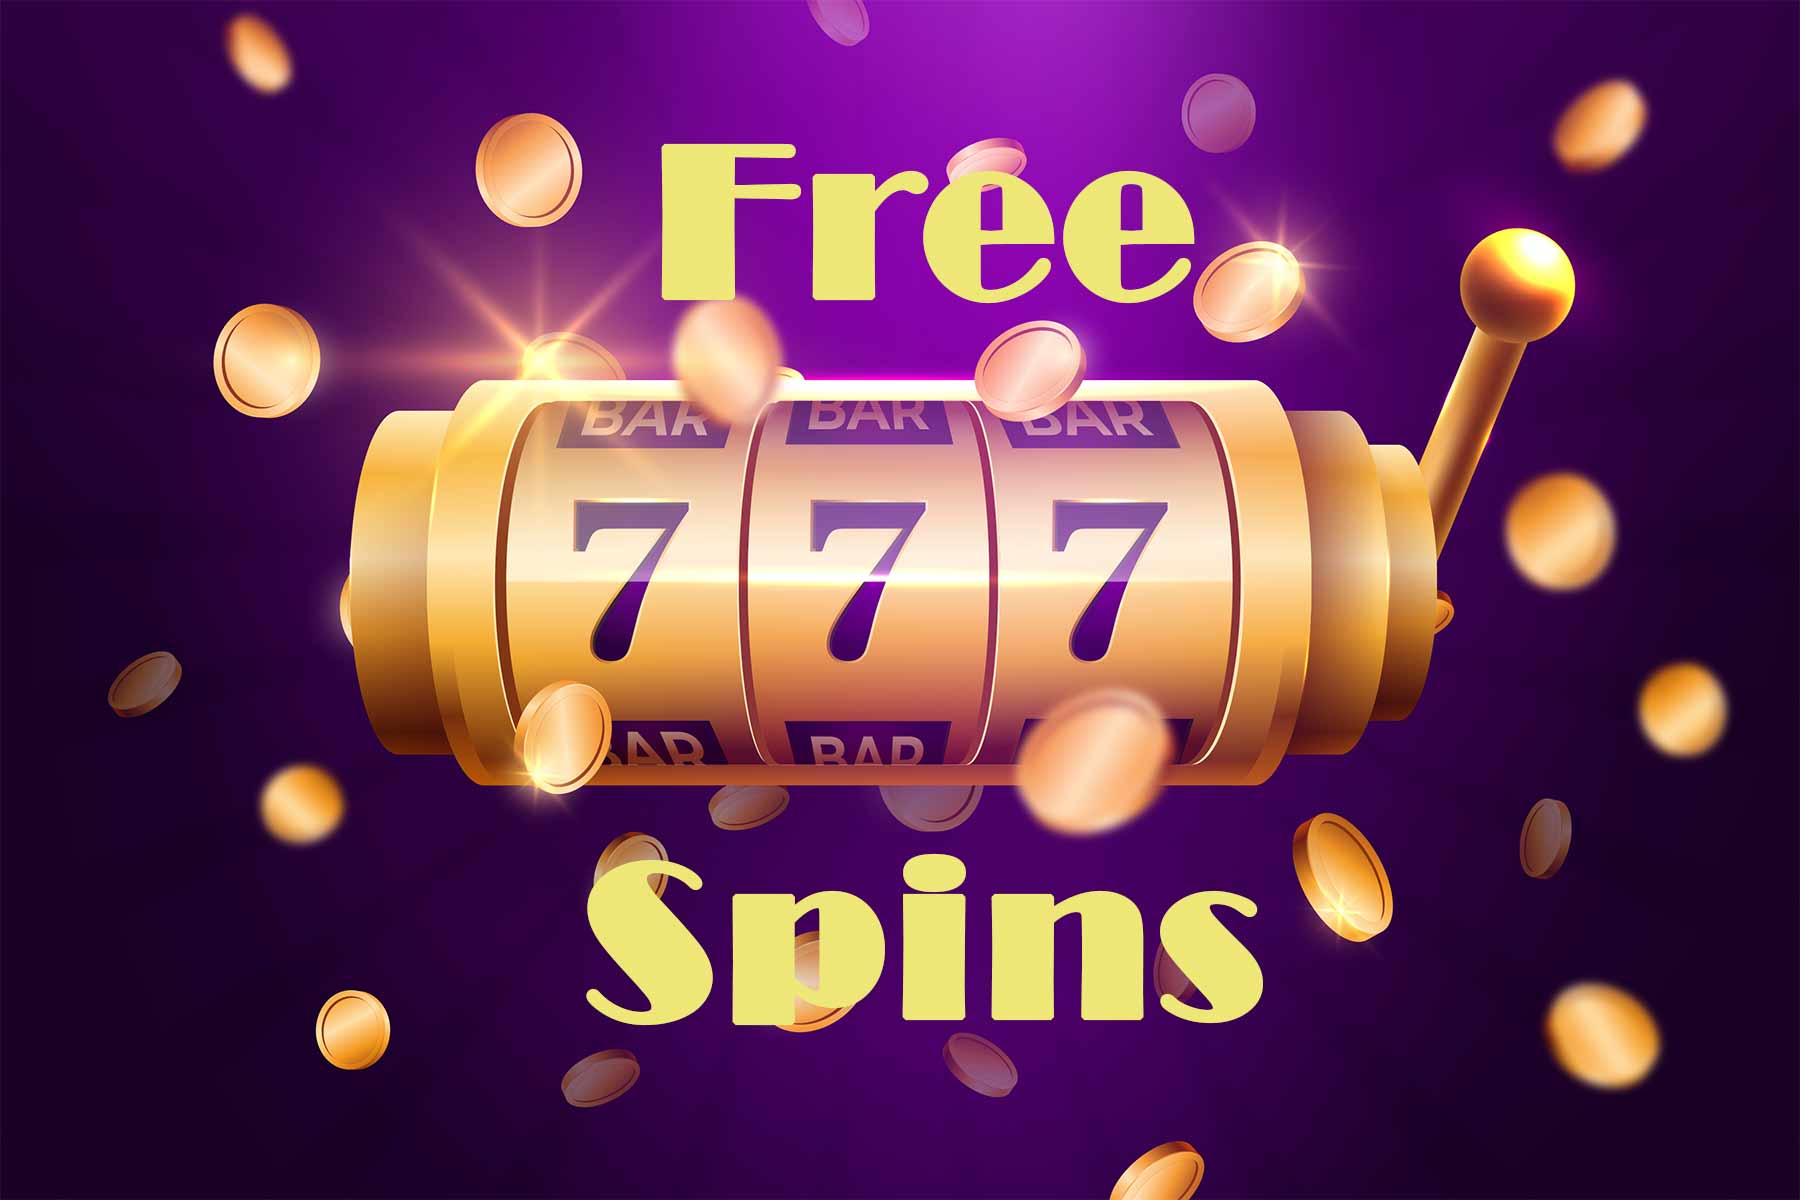 Pocketwin Slots Free Spins Gambling Online